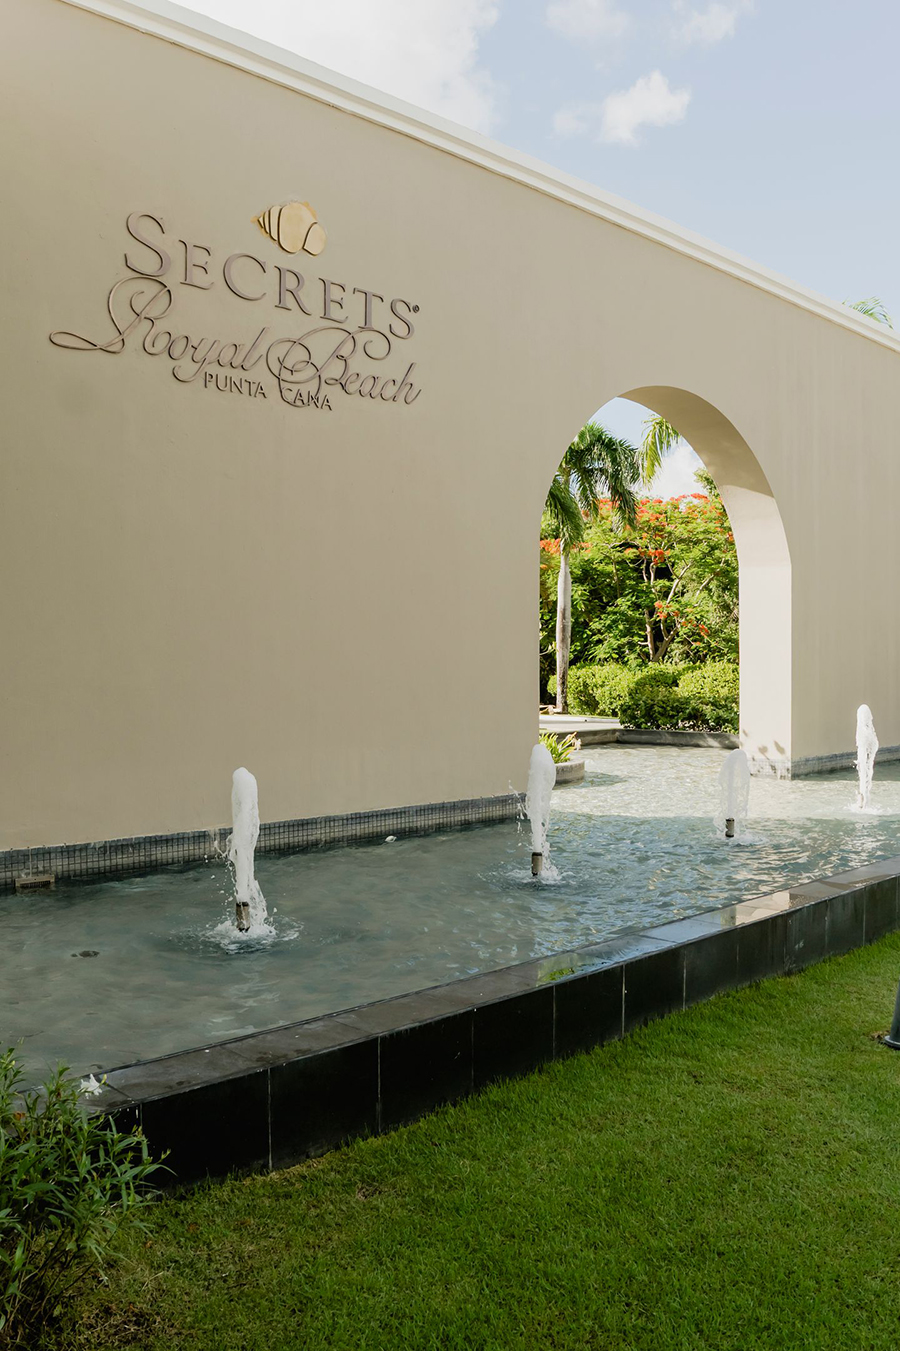 Secrets Royal Beach: hotel somente para adultos perfeito para lua de mel